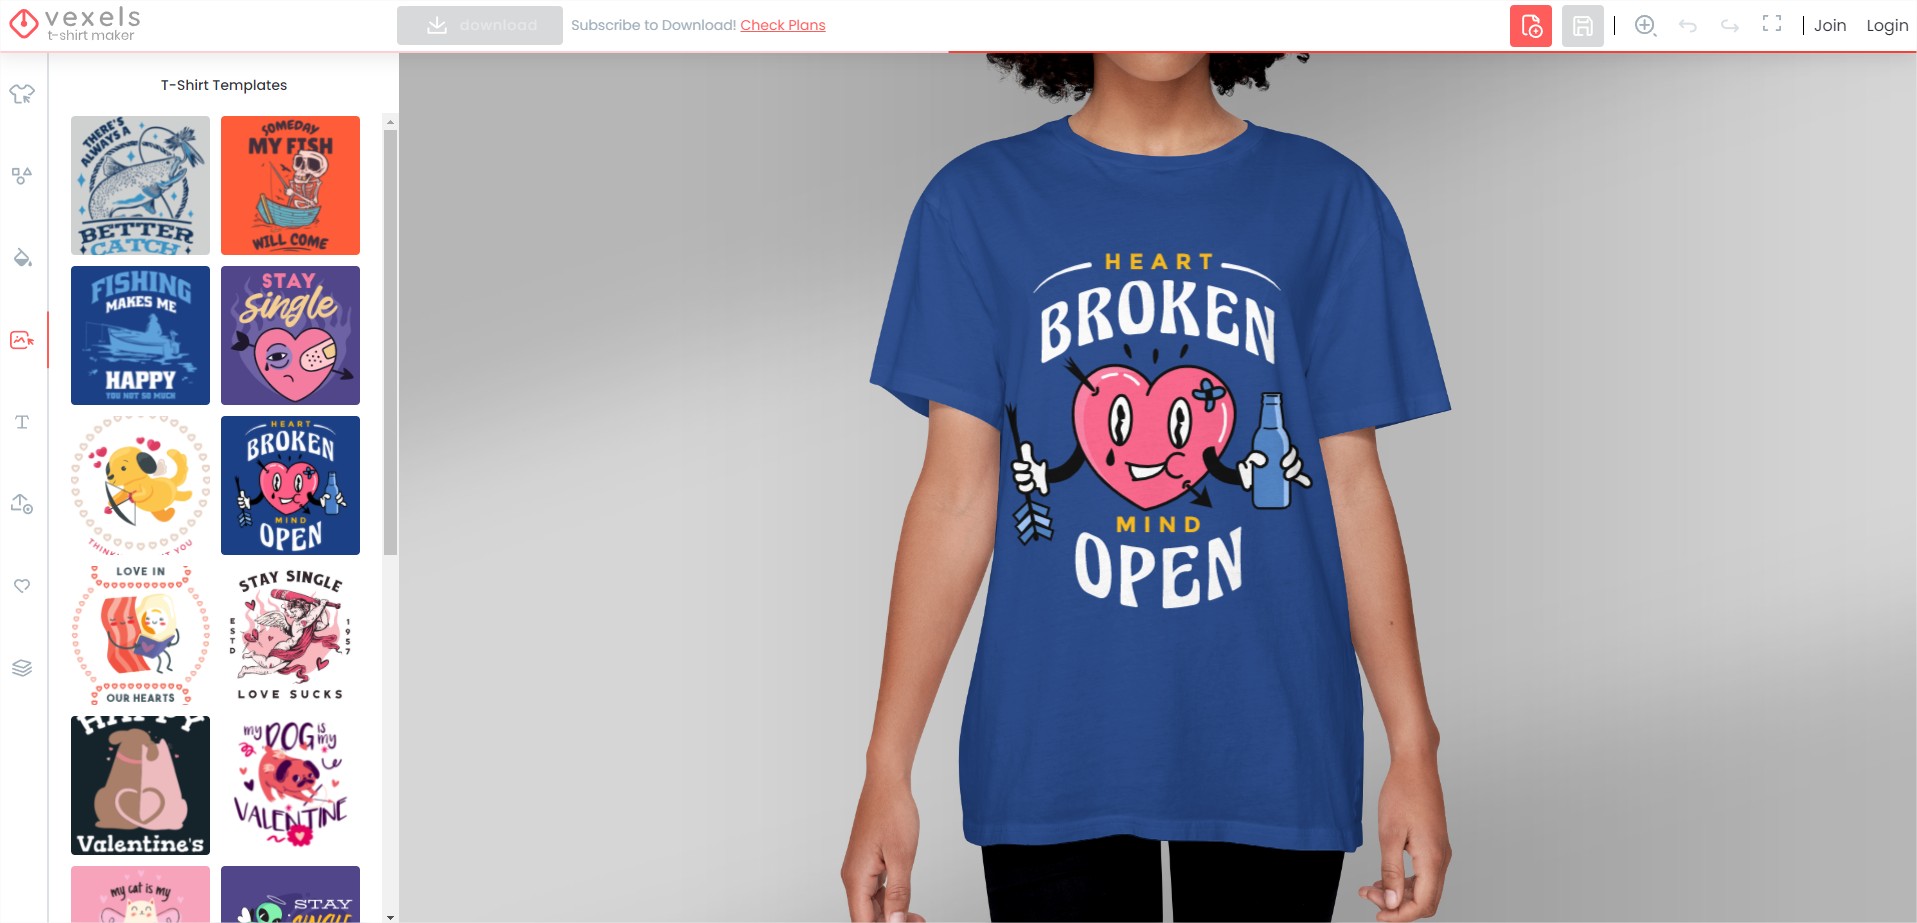 T-shirt Maker Valentine's Day design